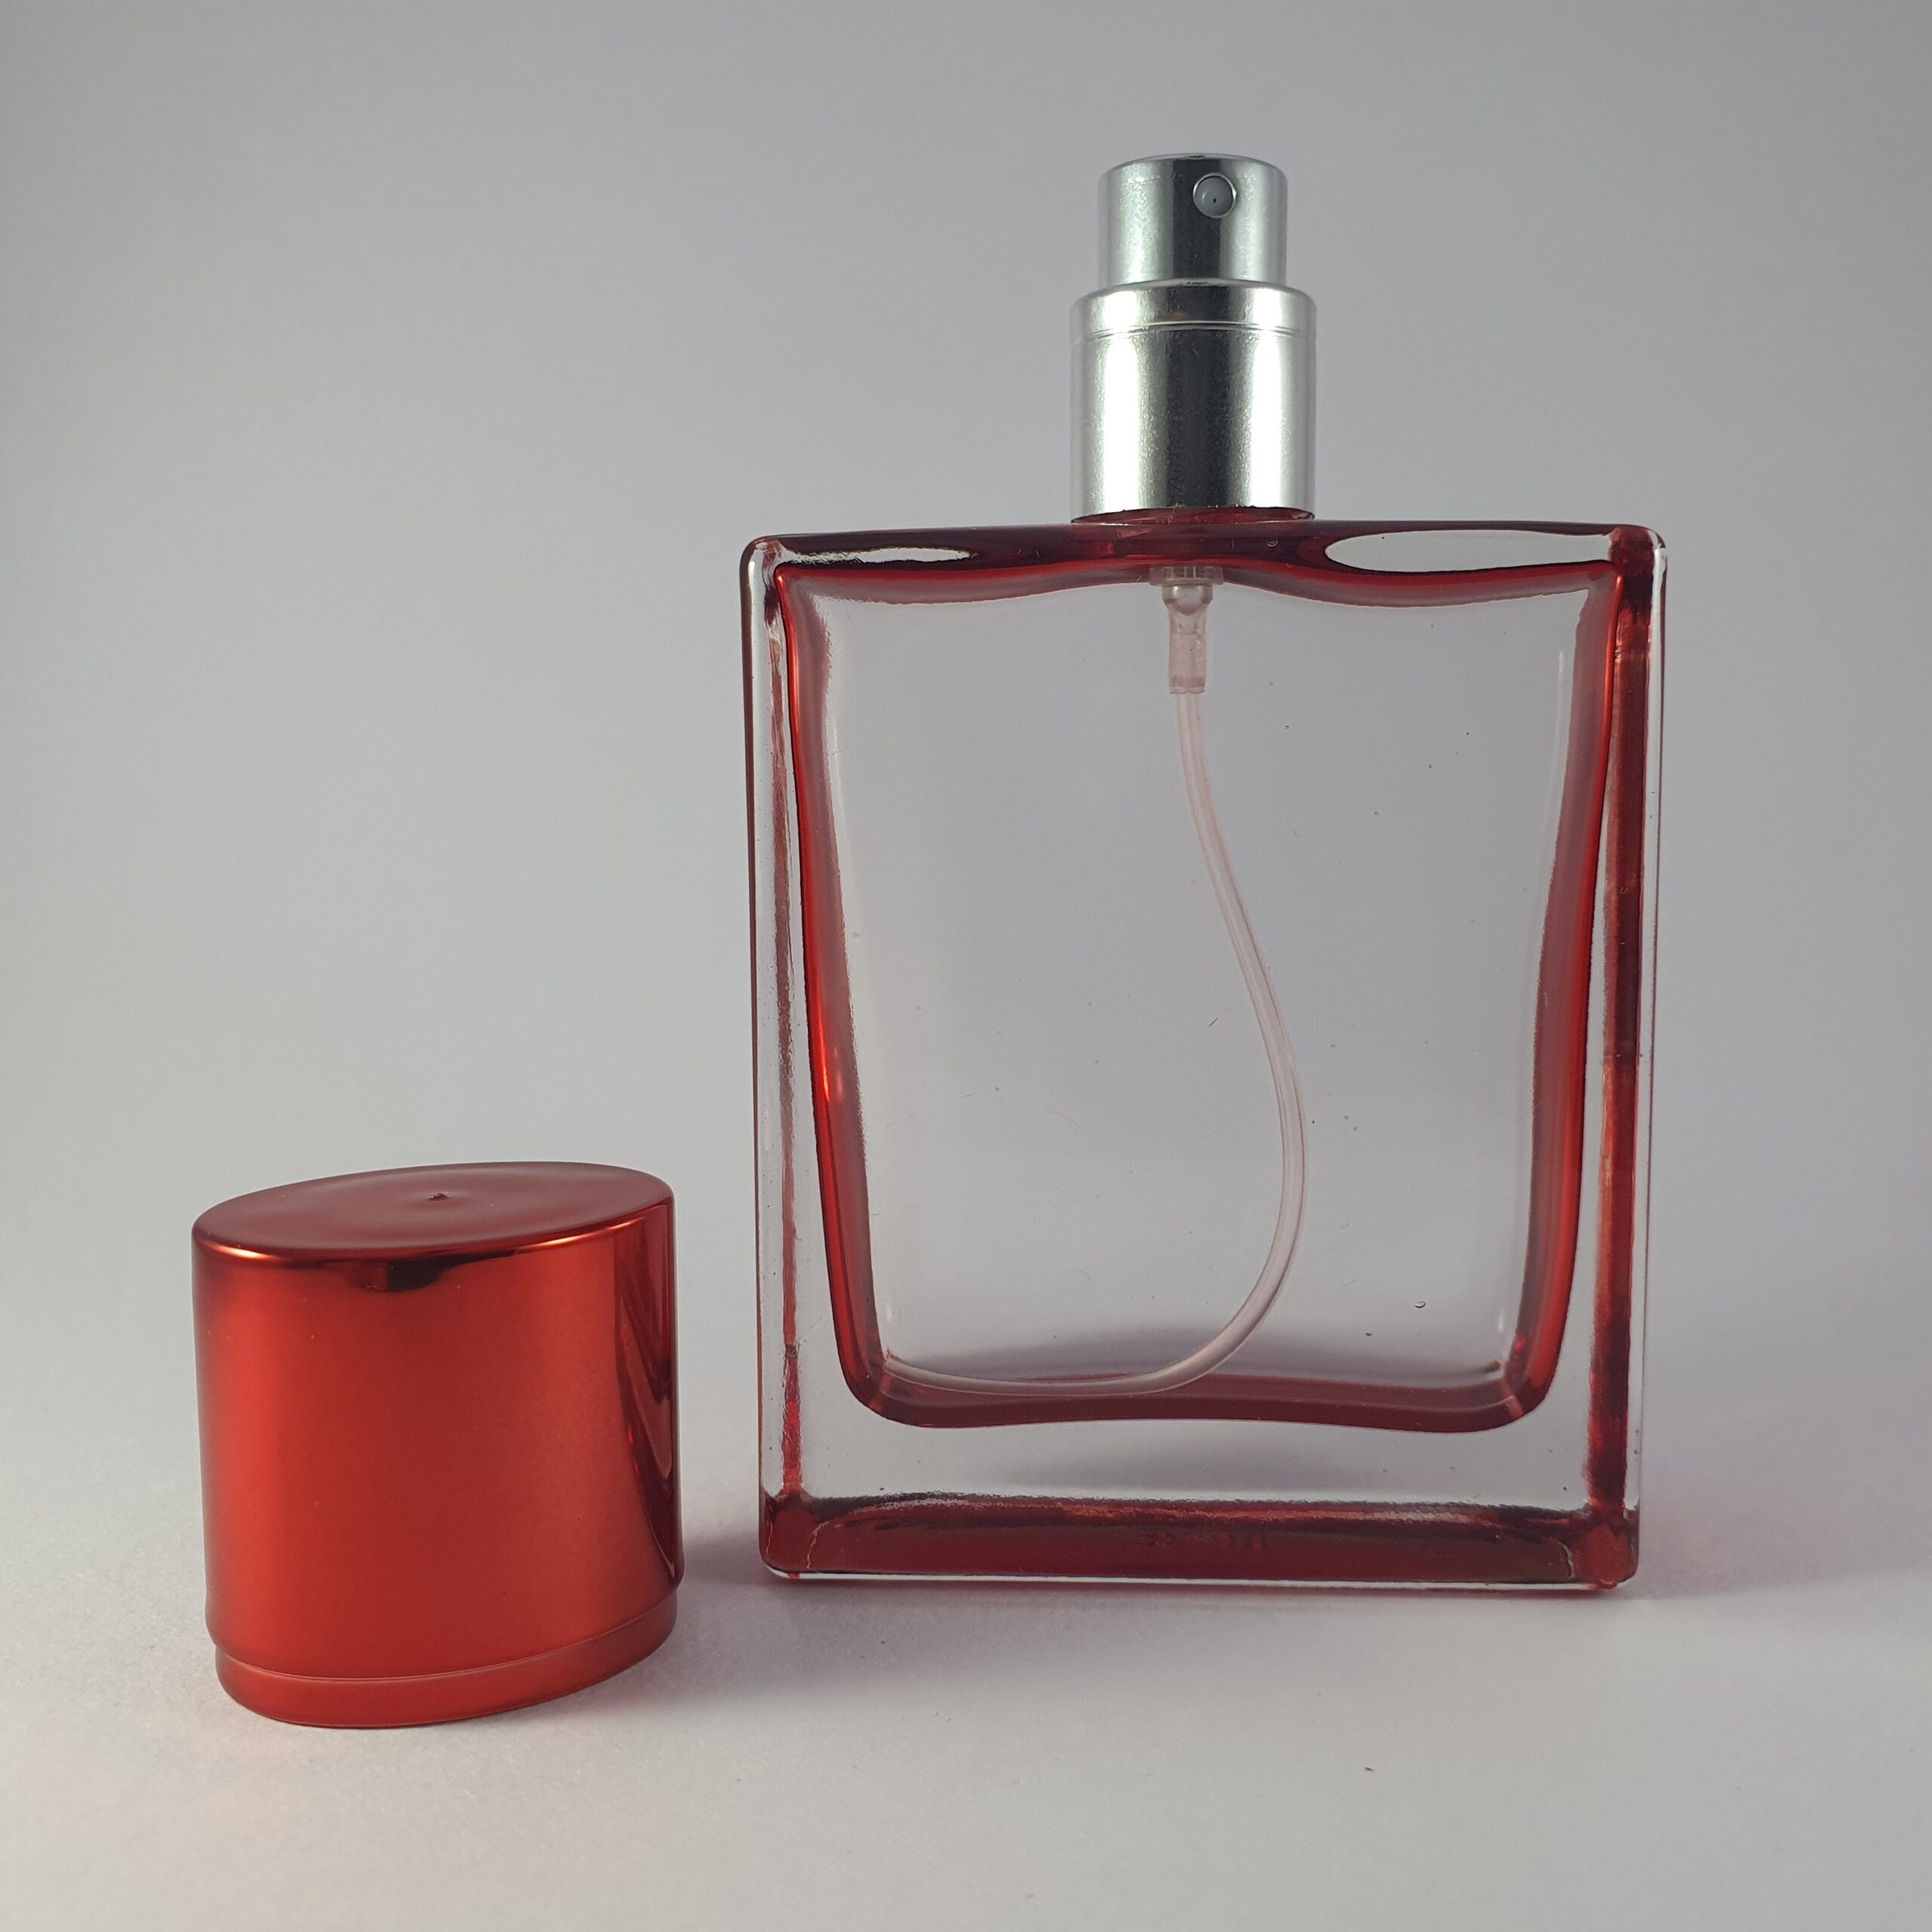 Buy Fancy Perfume Bottle Online In India -  India